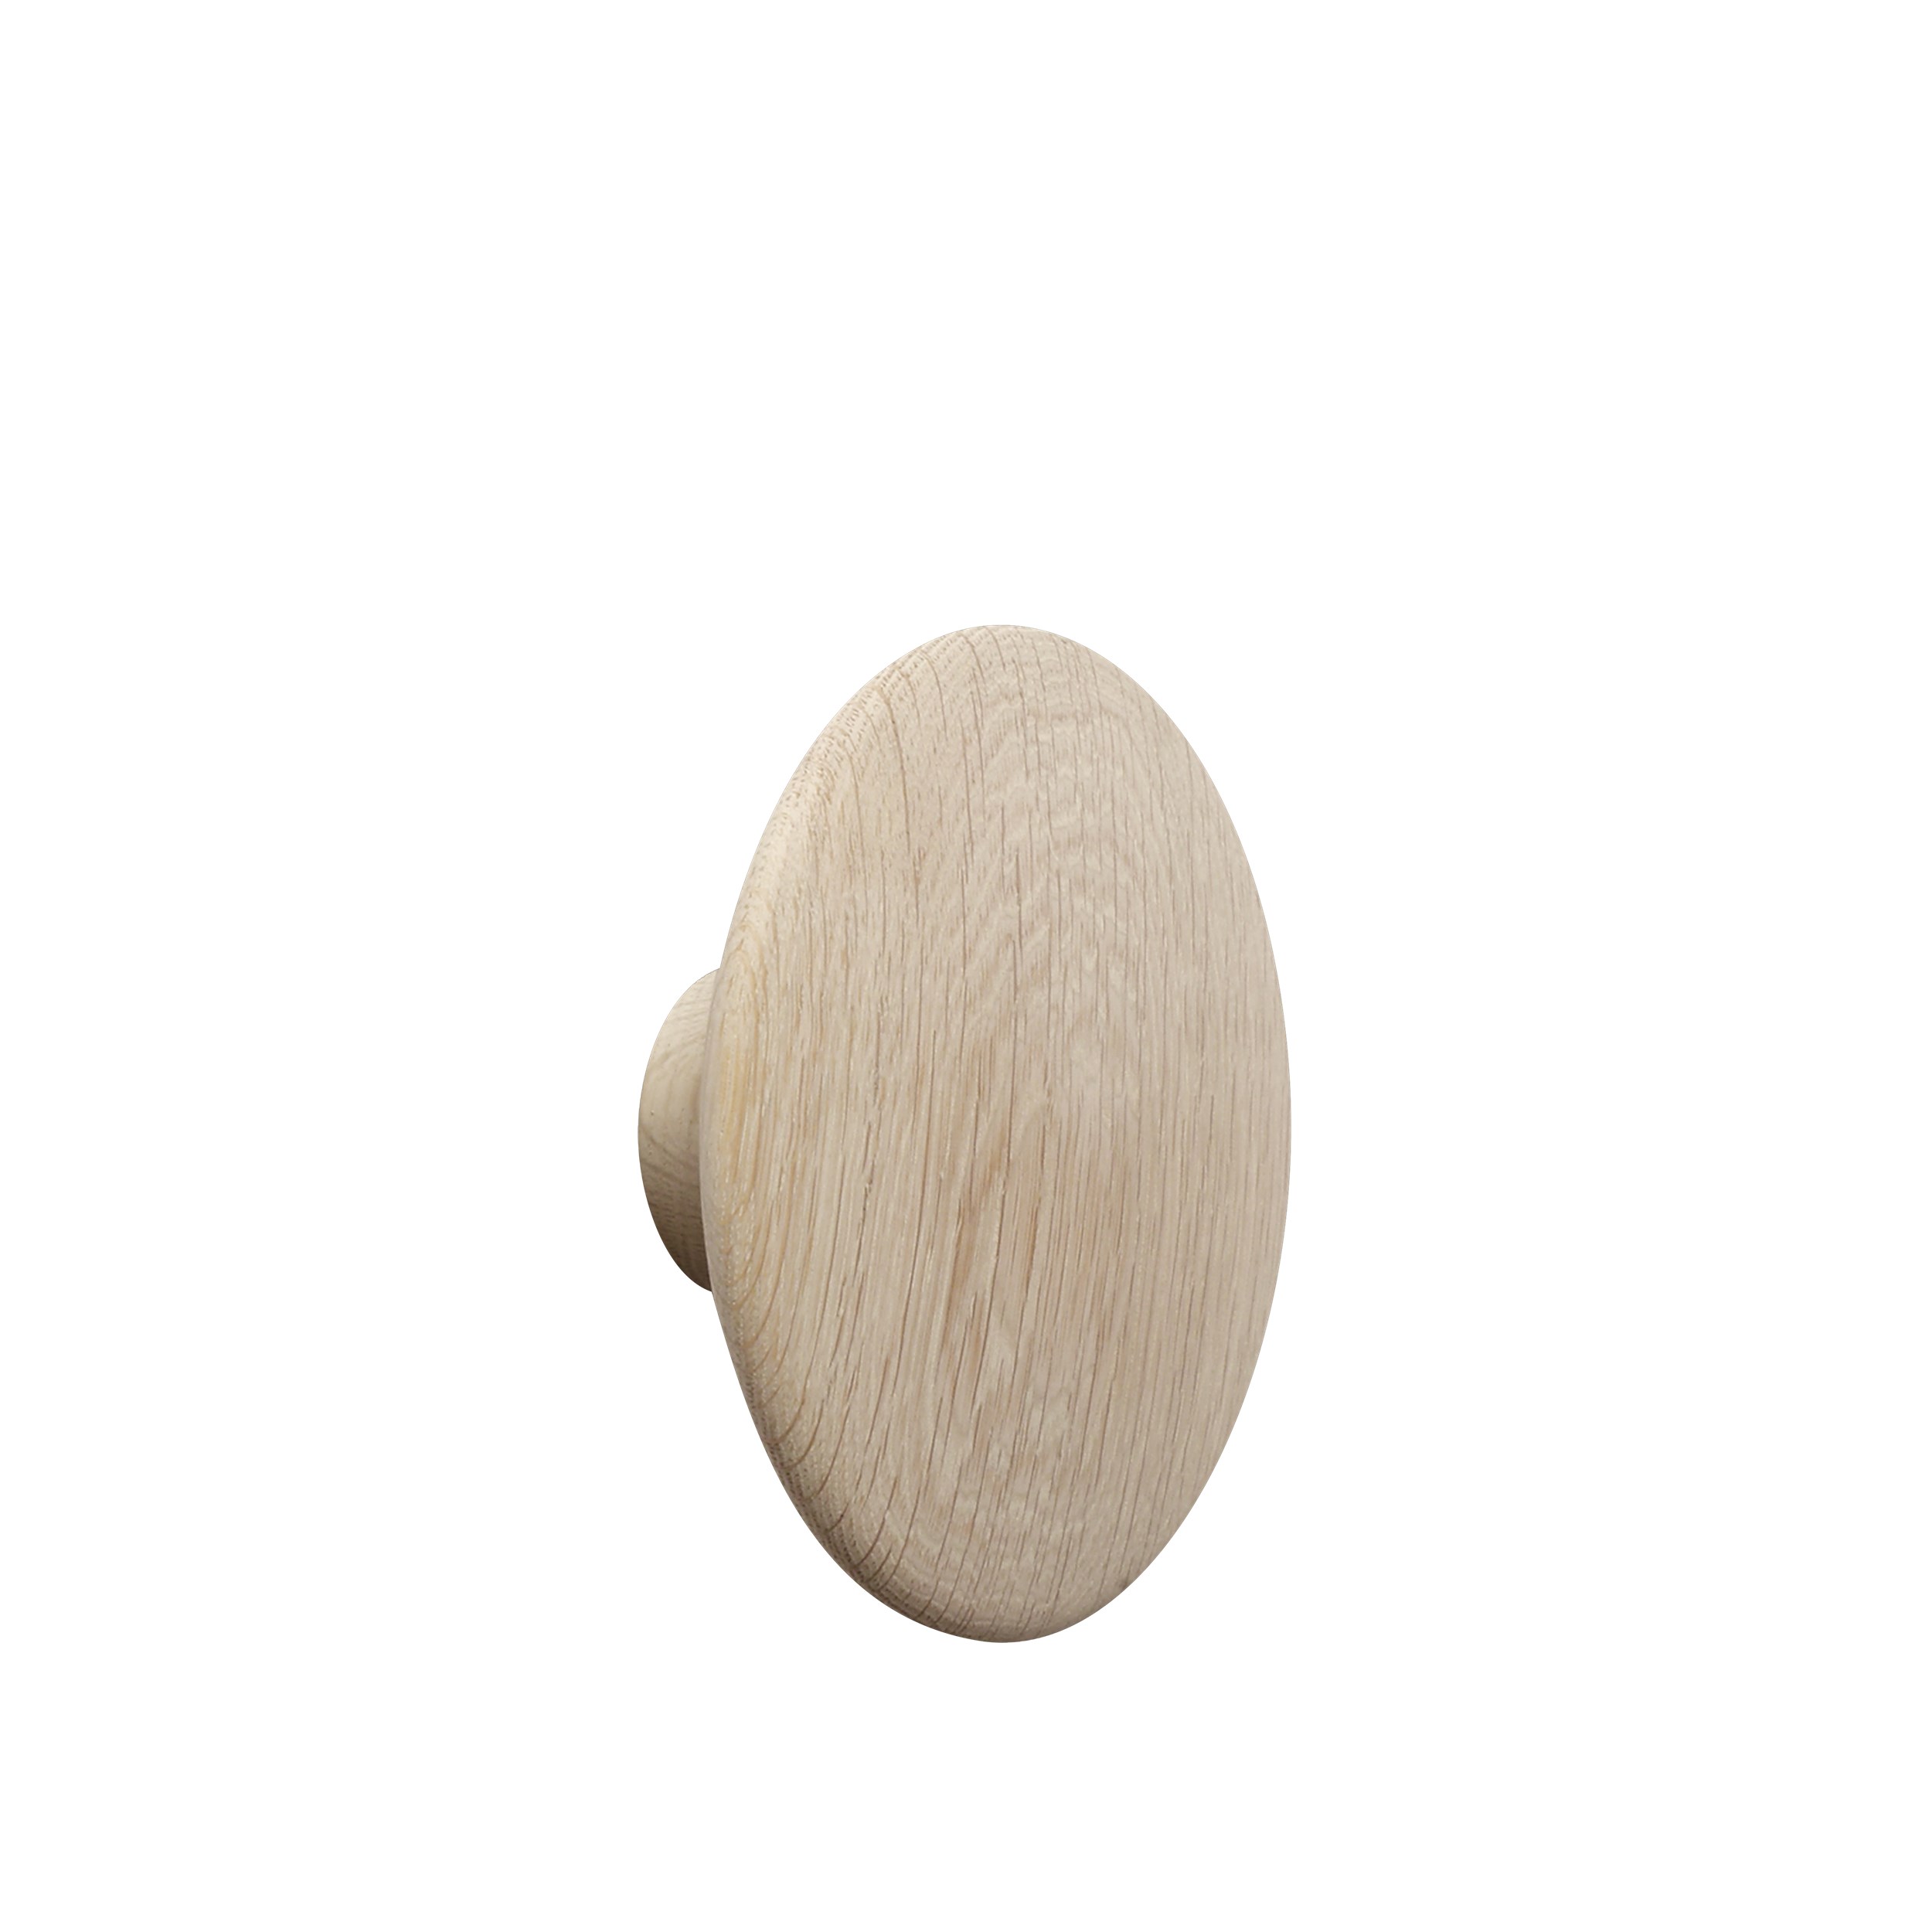 Dot wood large Ø 17 cm oak